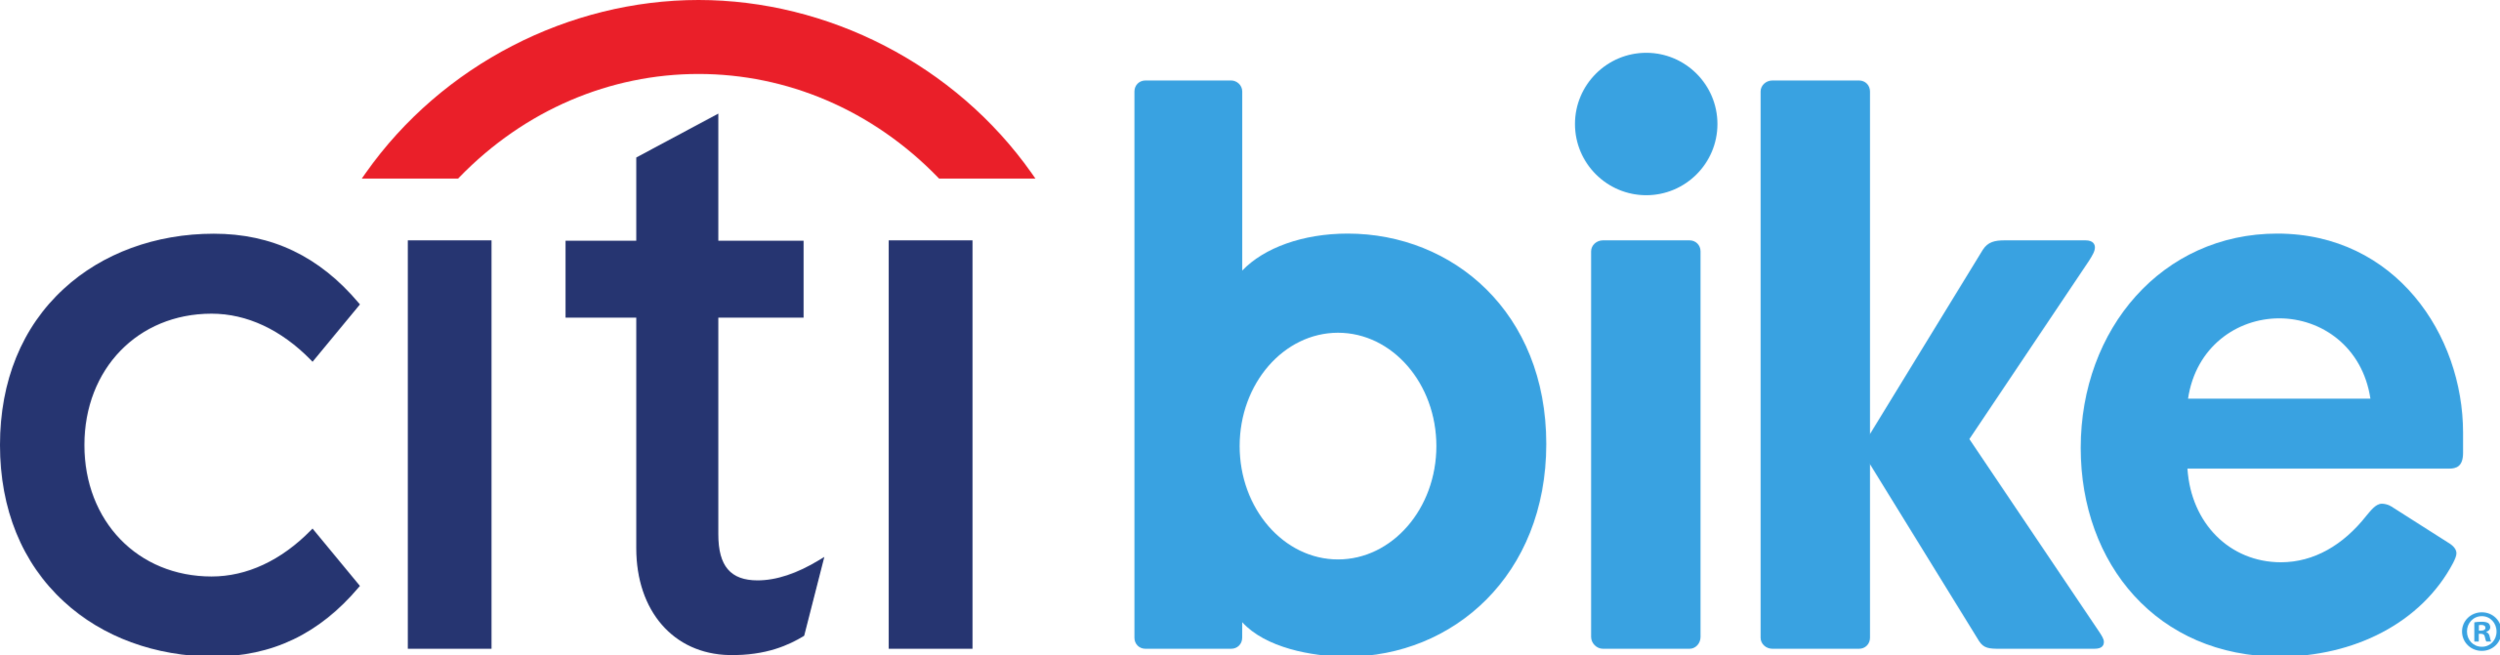 Citibike logo.png